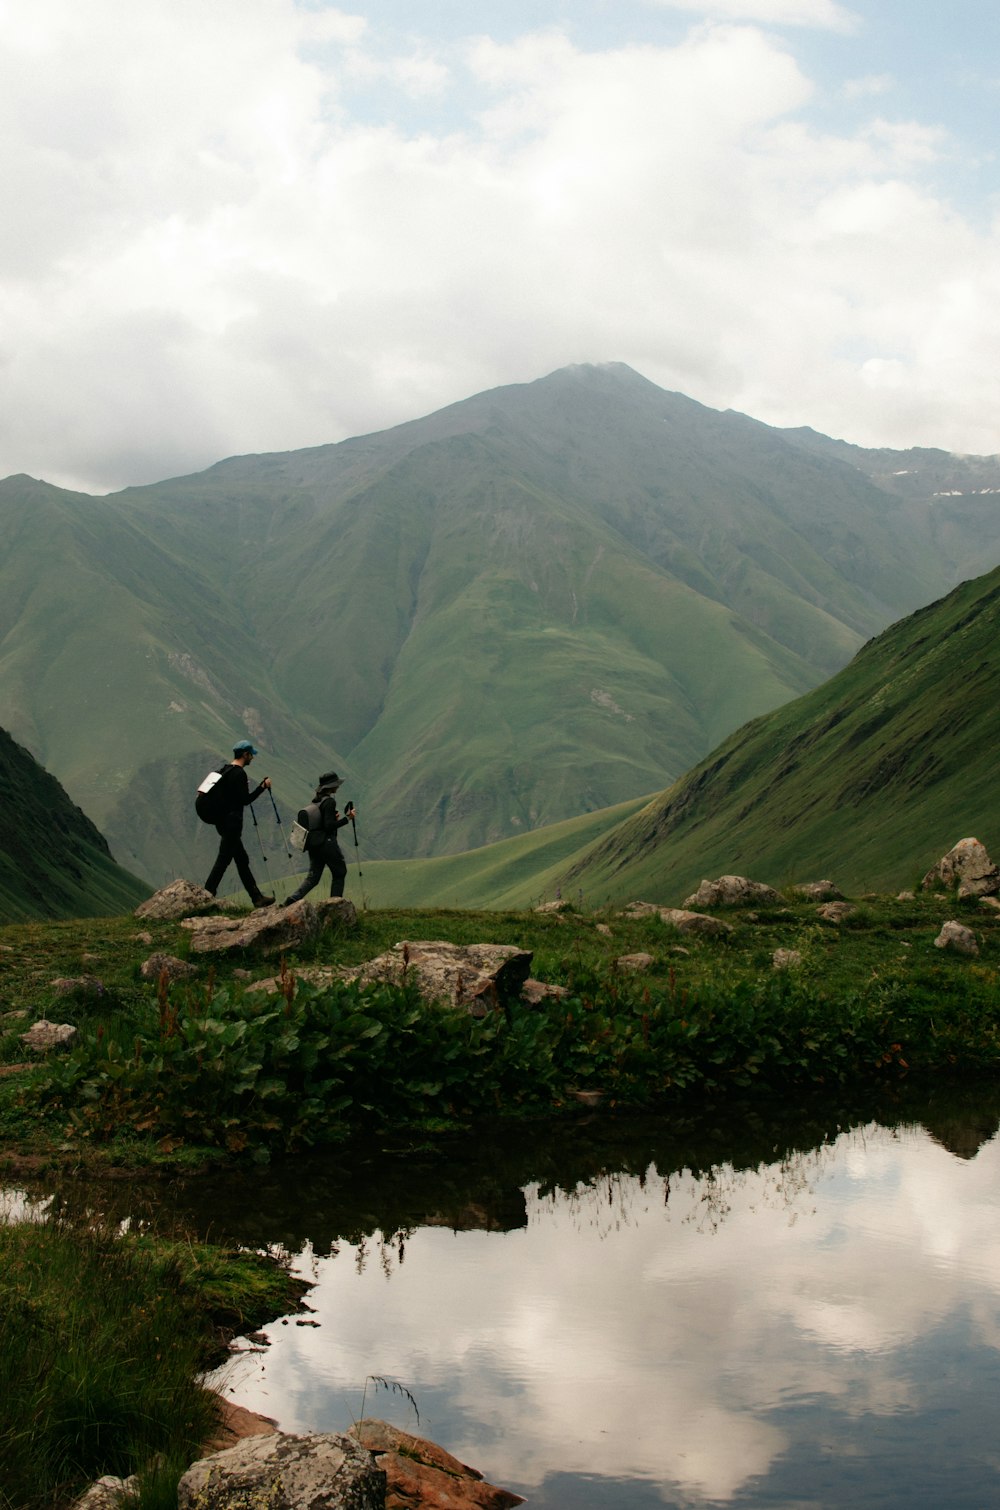 a couple of people walking across a lush green hillside